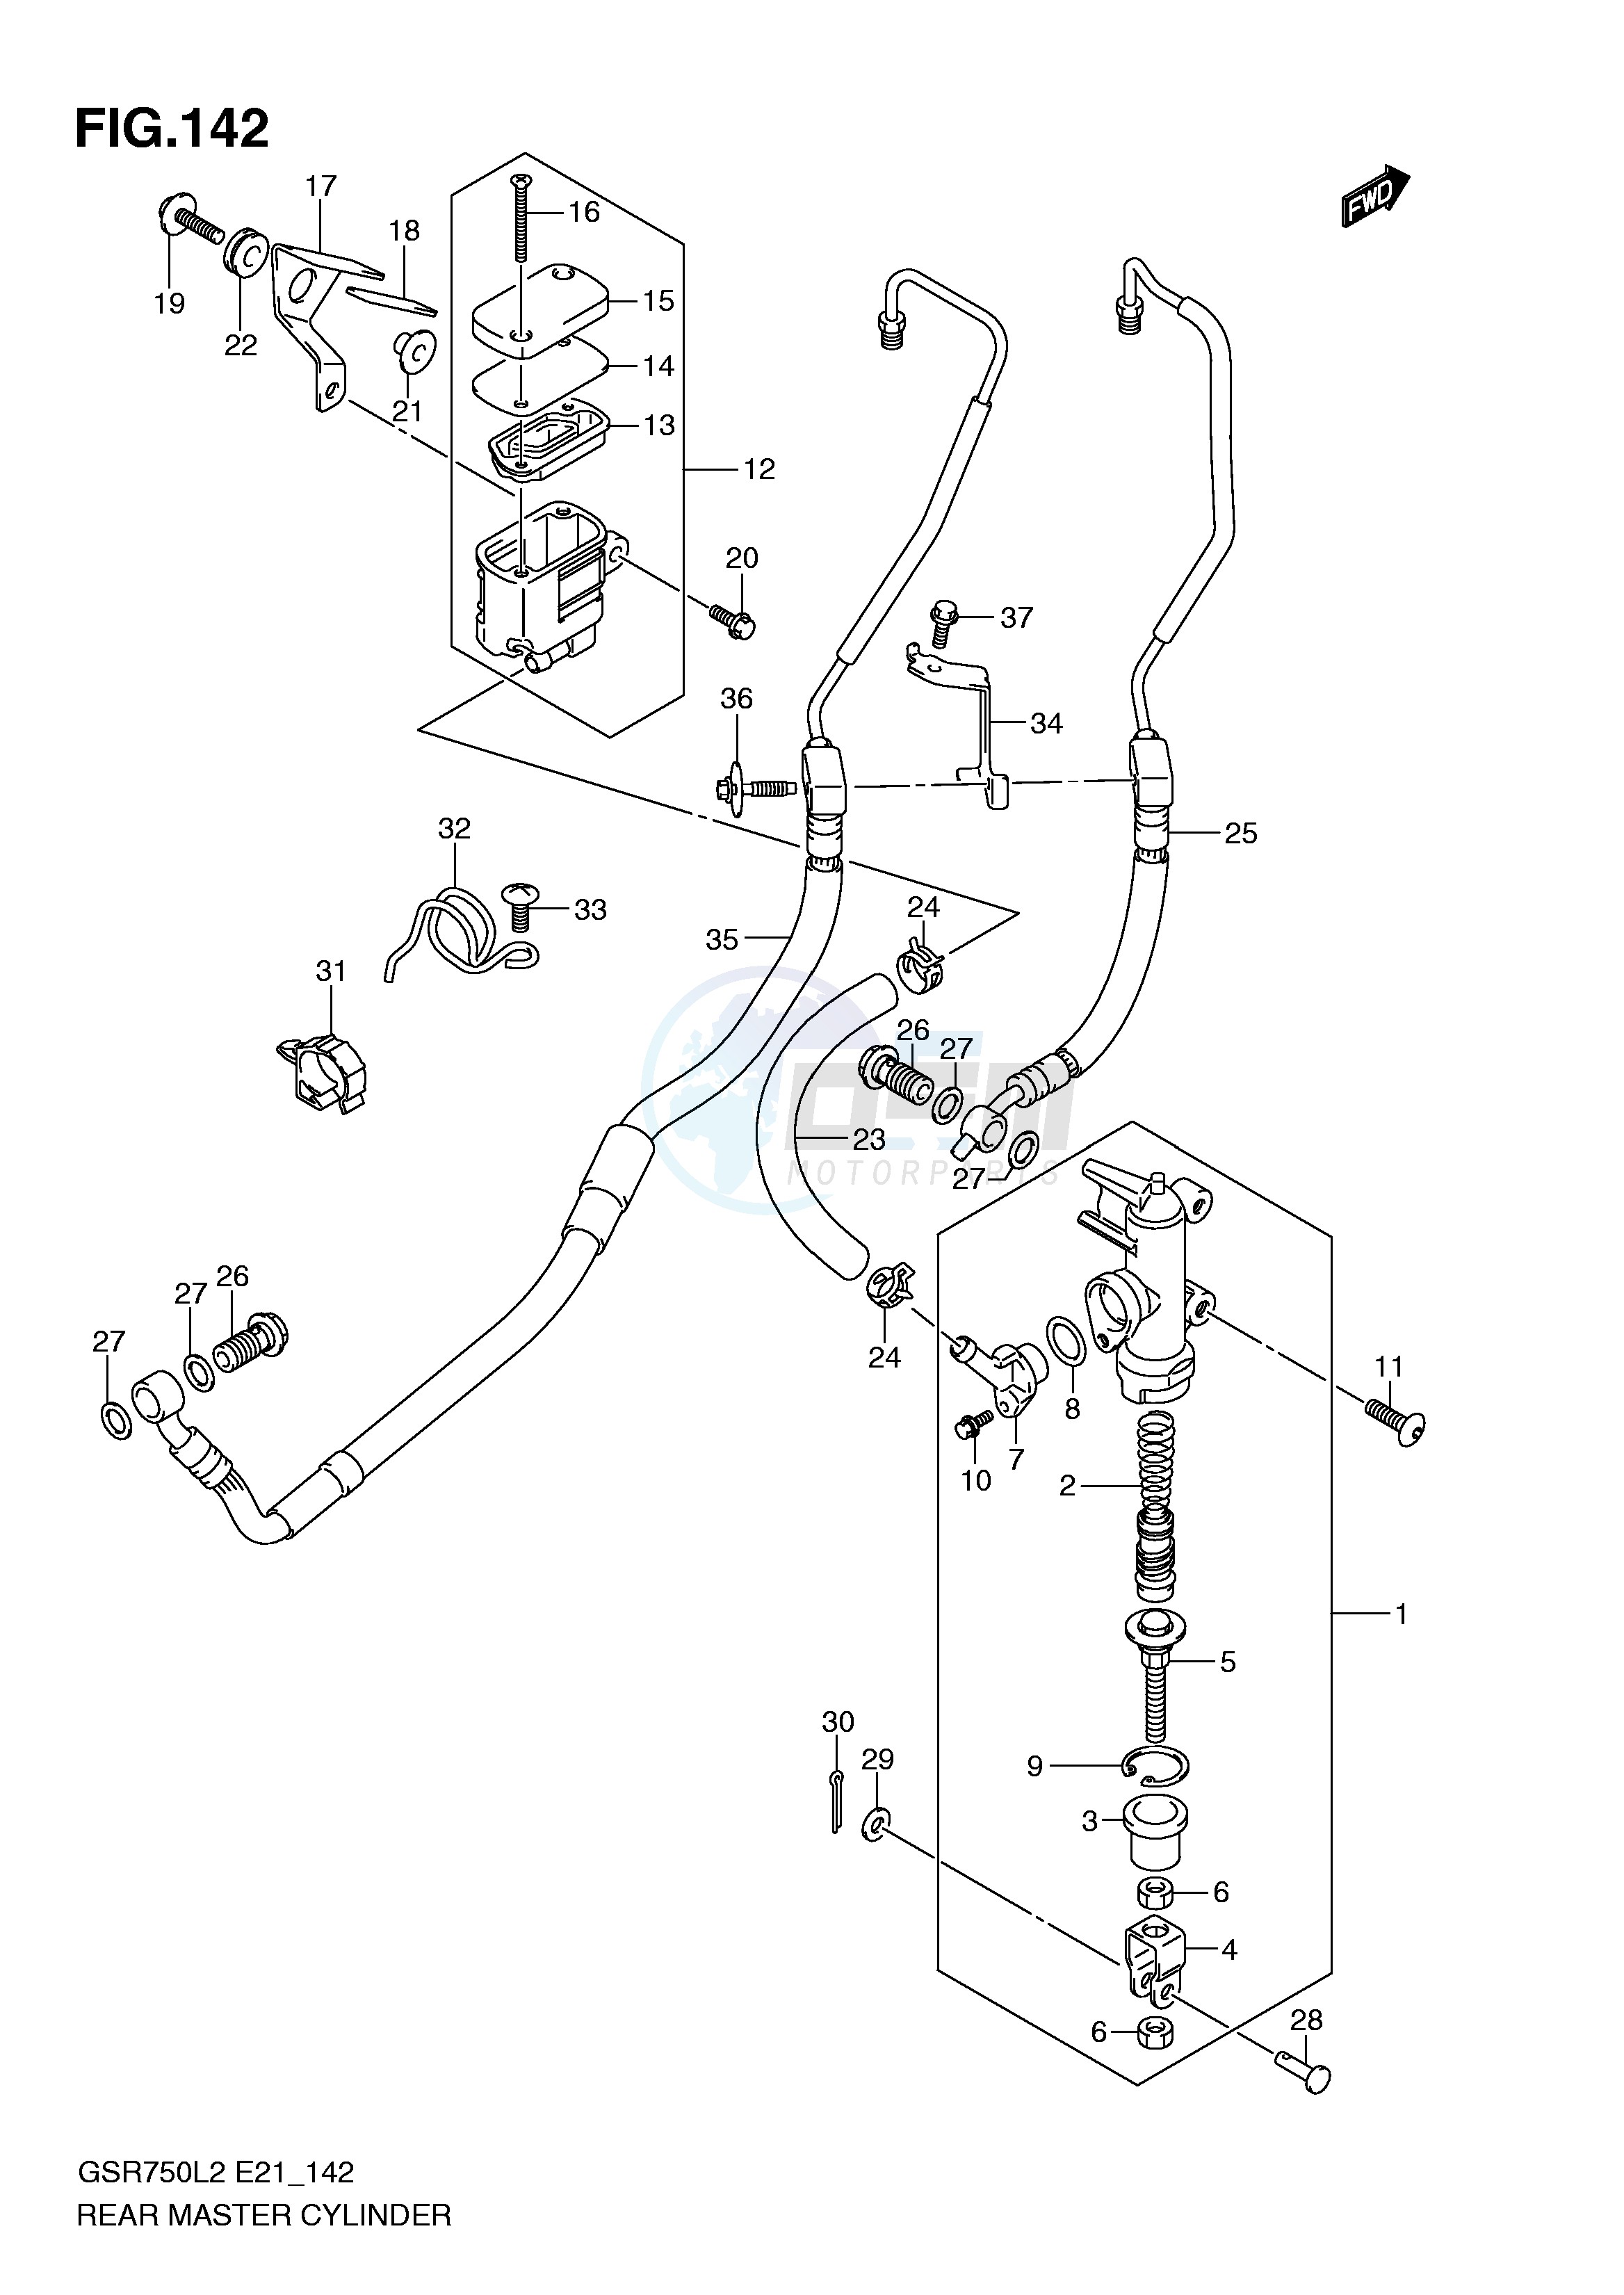 REAR MASTER CYLINDER (GSR750AL2 E24) blueprint